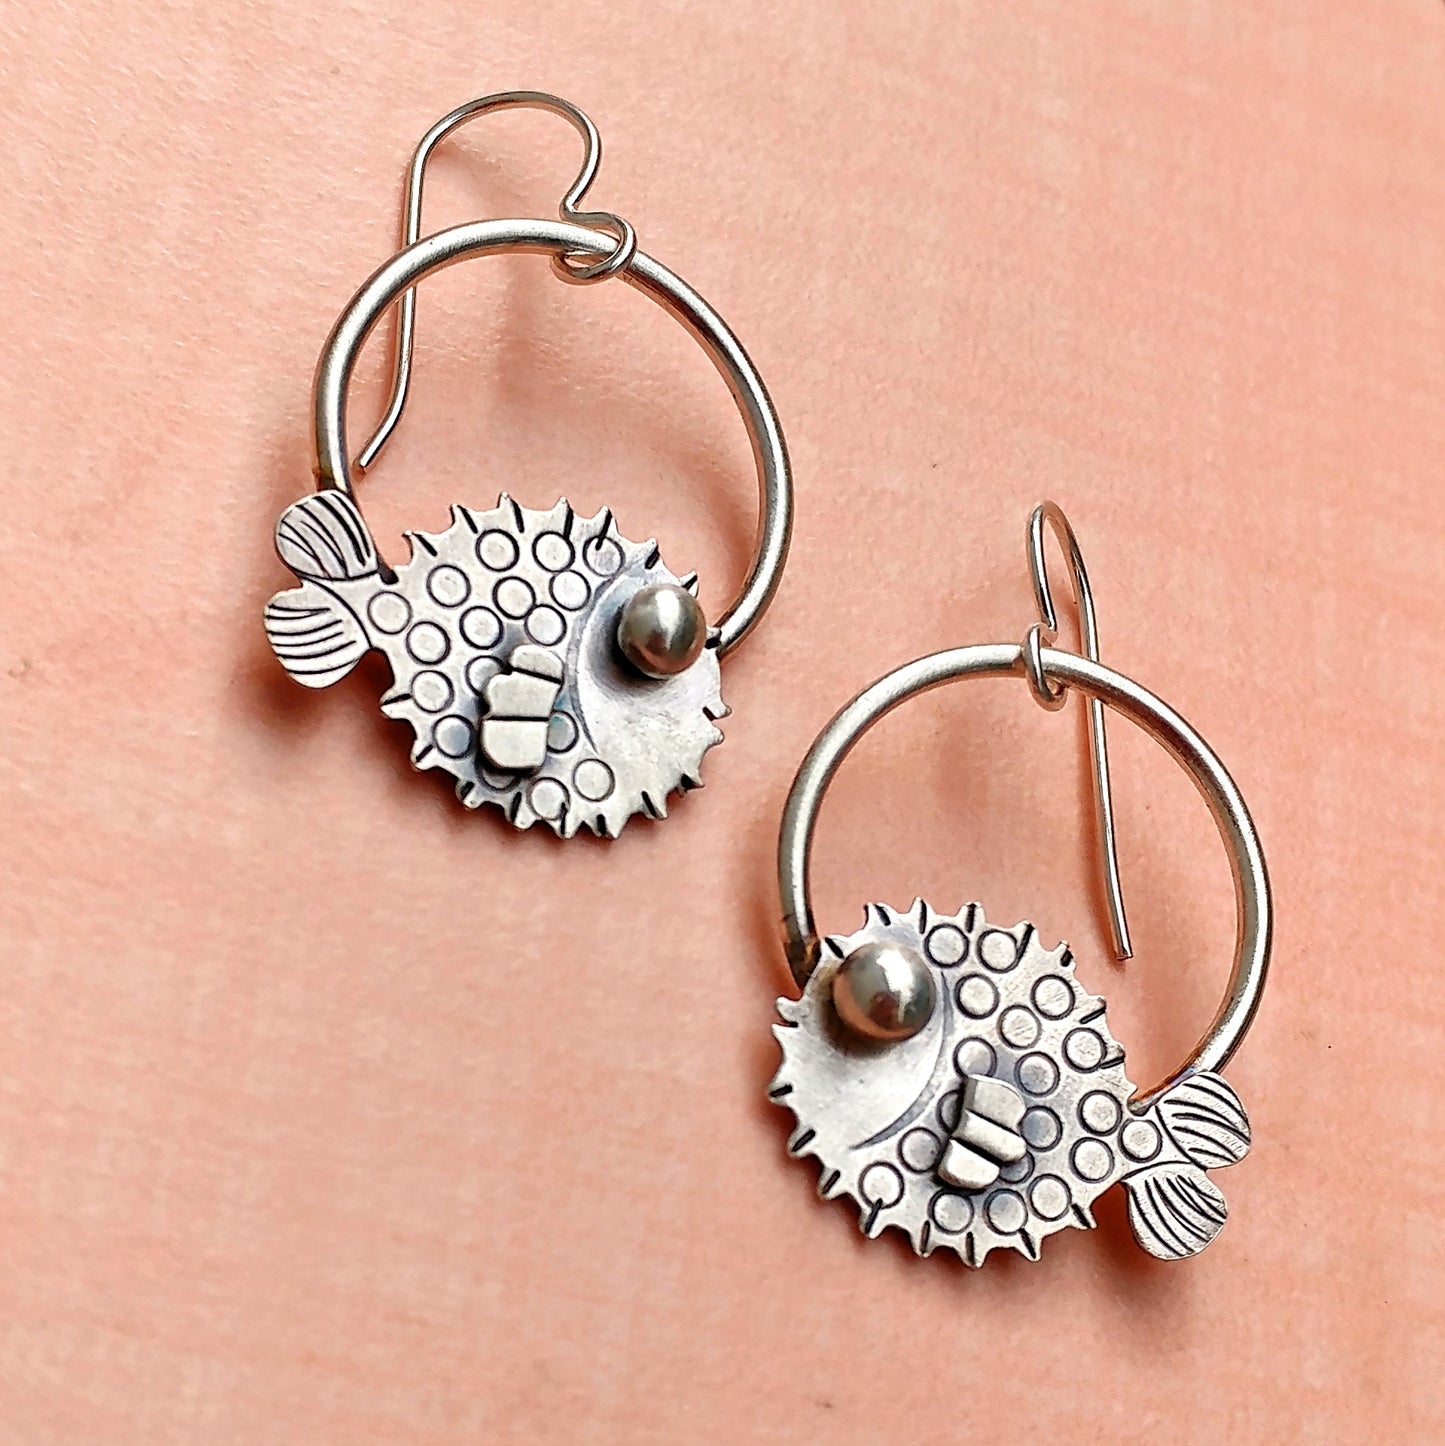 Handmade puffer fish earrings